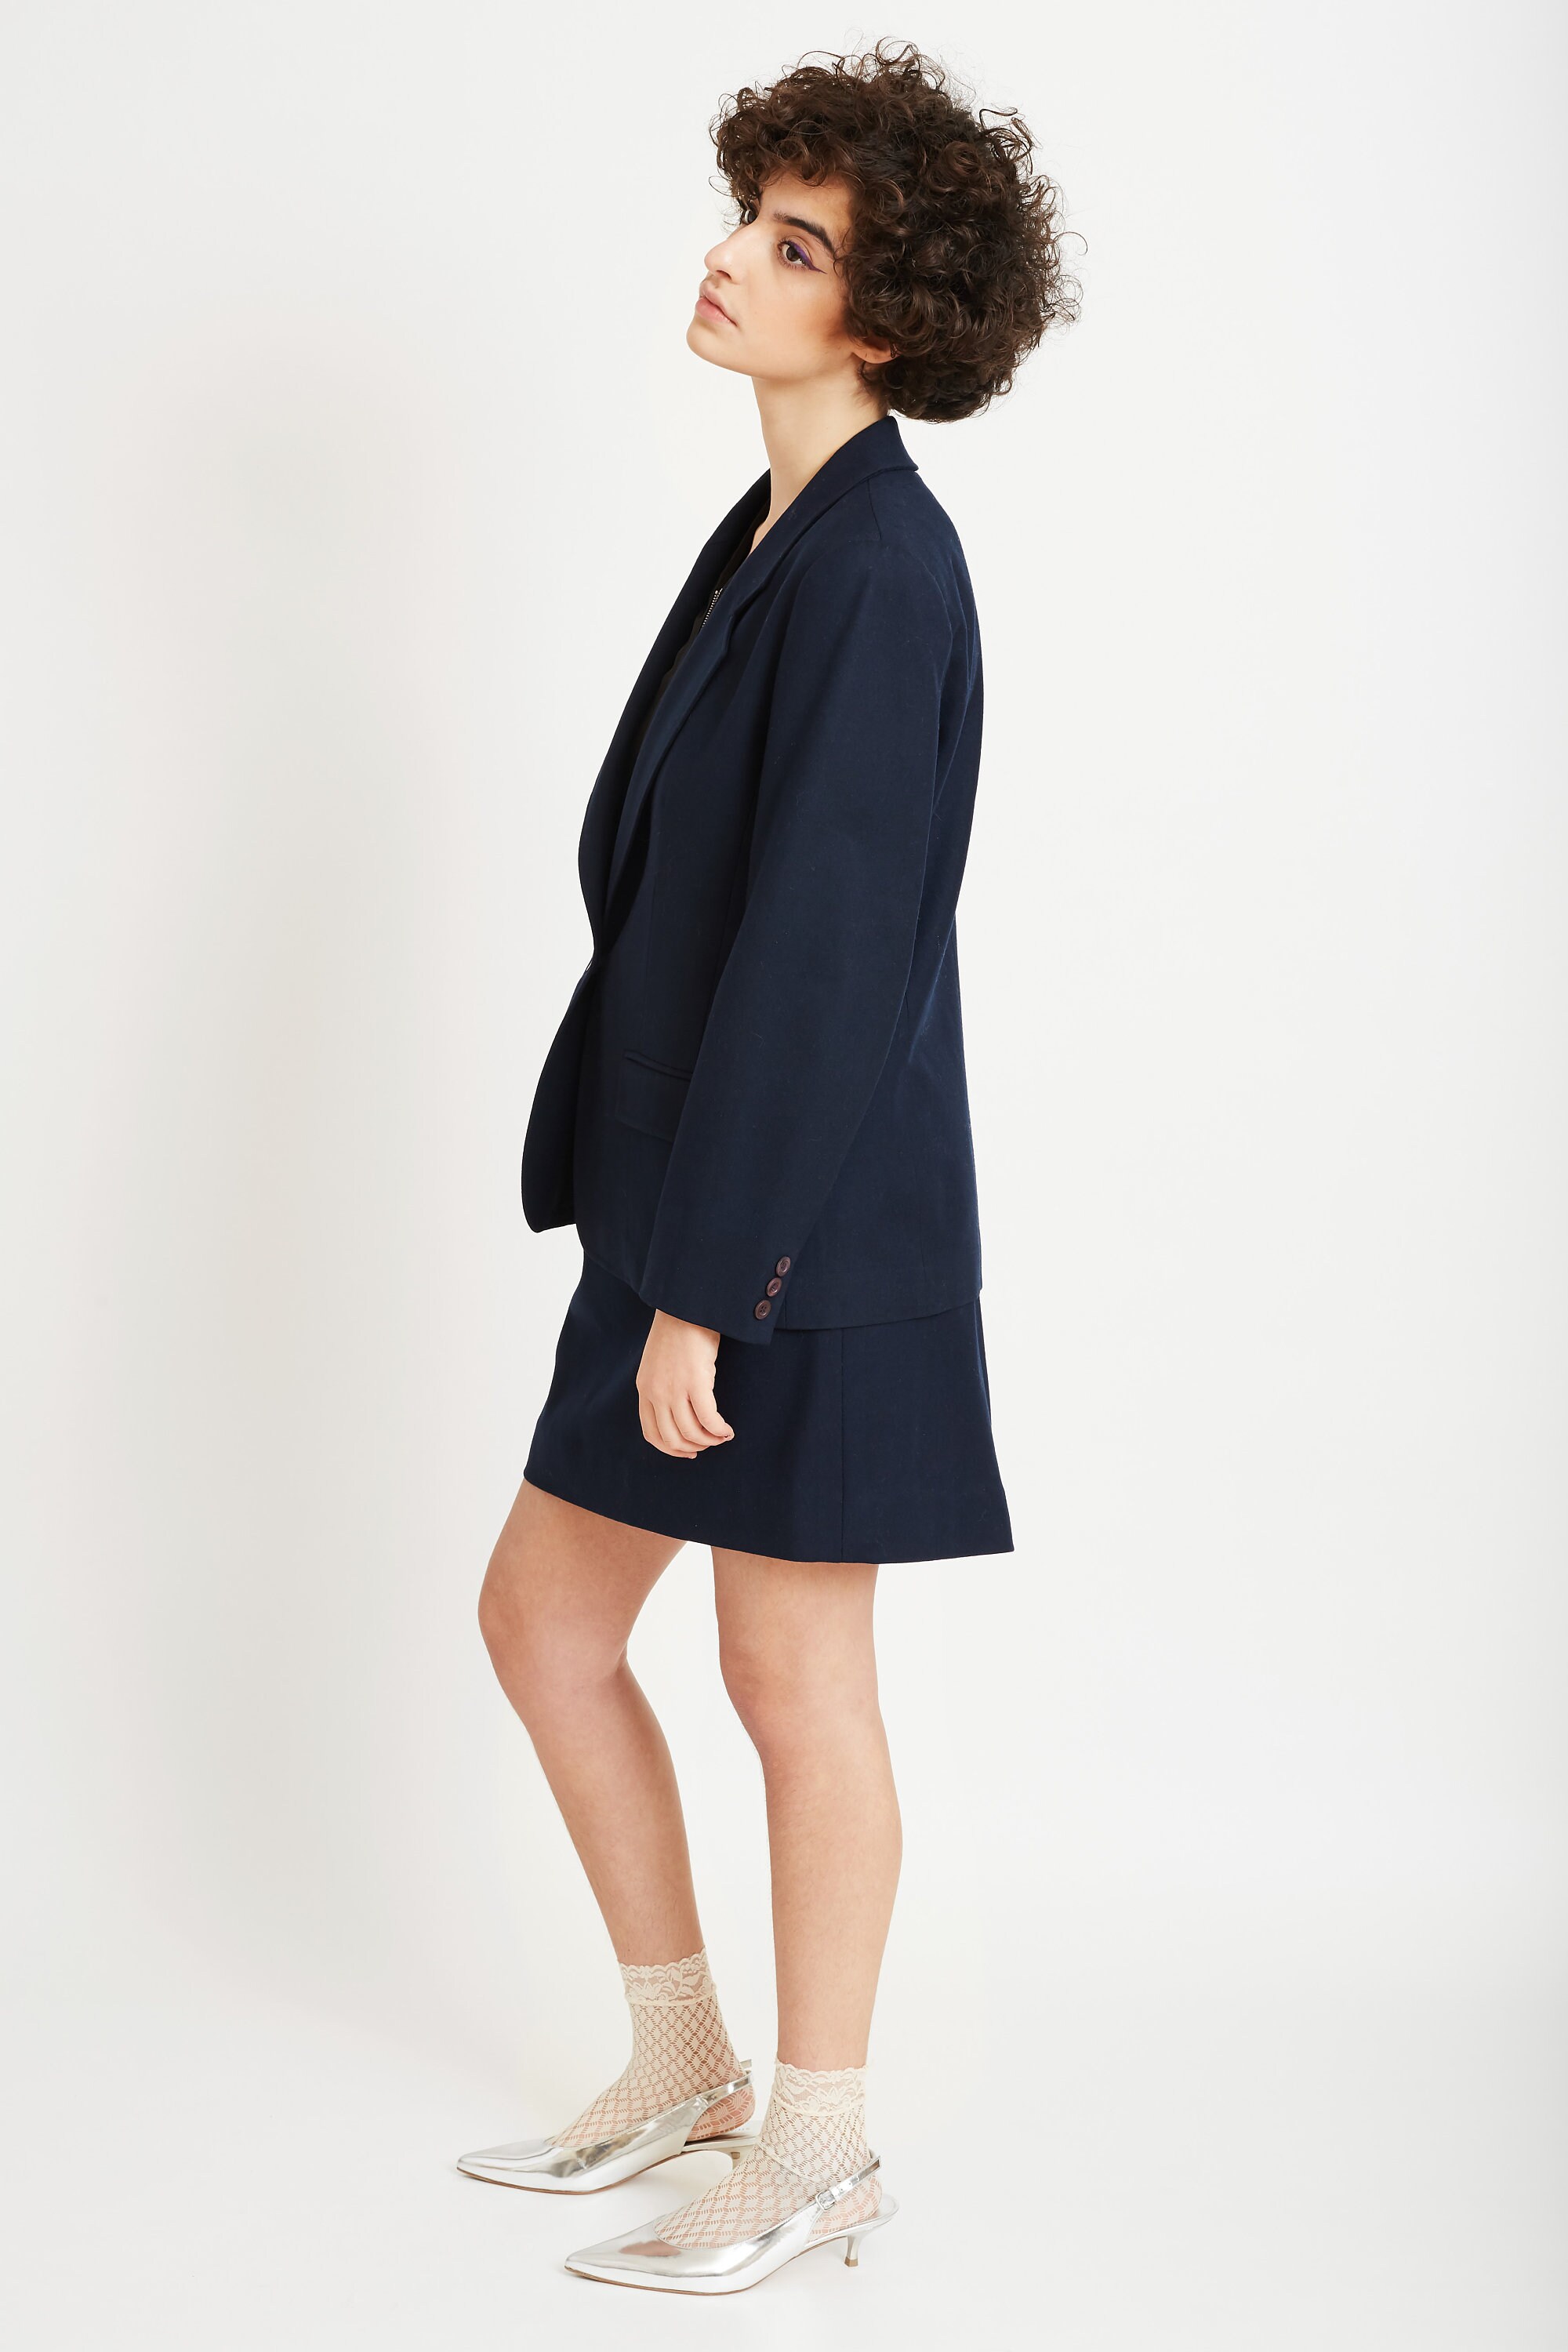 Pendelton Wool Suit Set W/ Mini Skirt and Blazer - Etsy